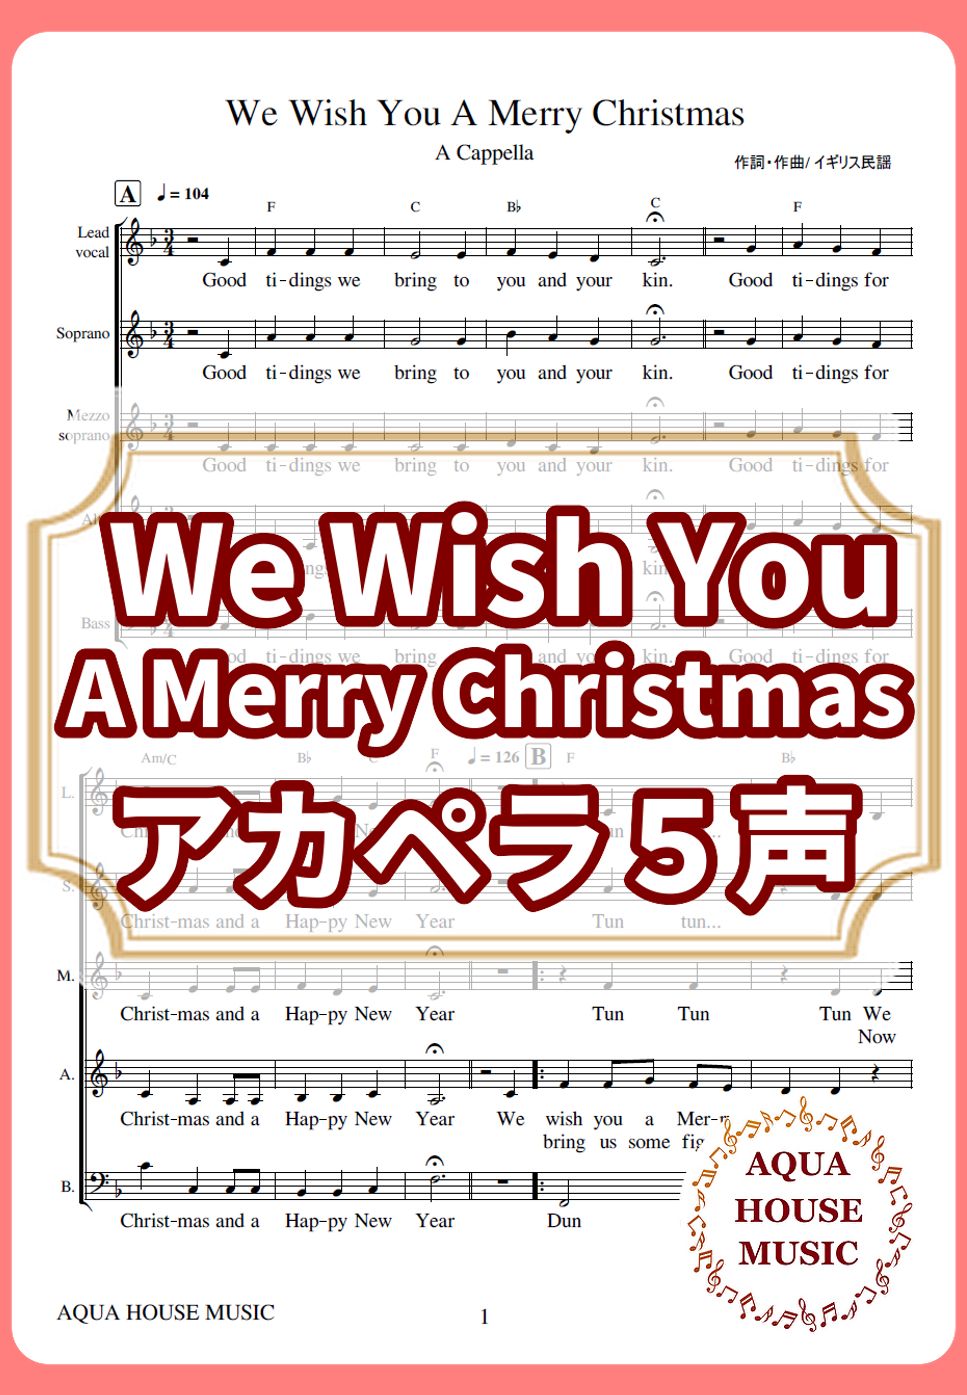 We Wish You A Merry Christmas (アカペラ楽譜♪５声ボイパなし) by 飯田 亜紗子